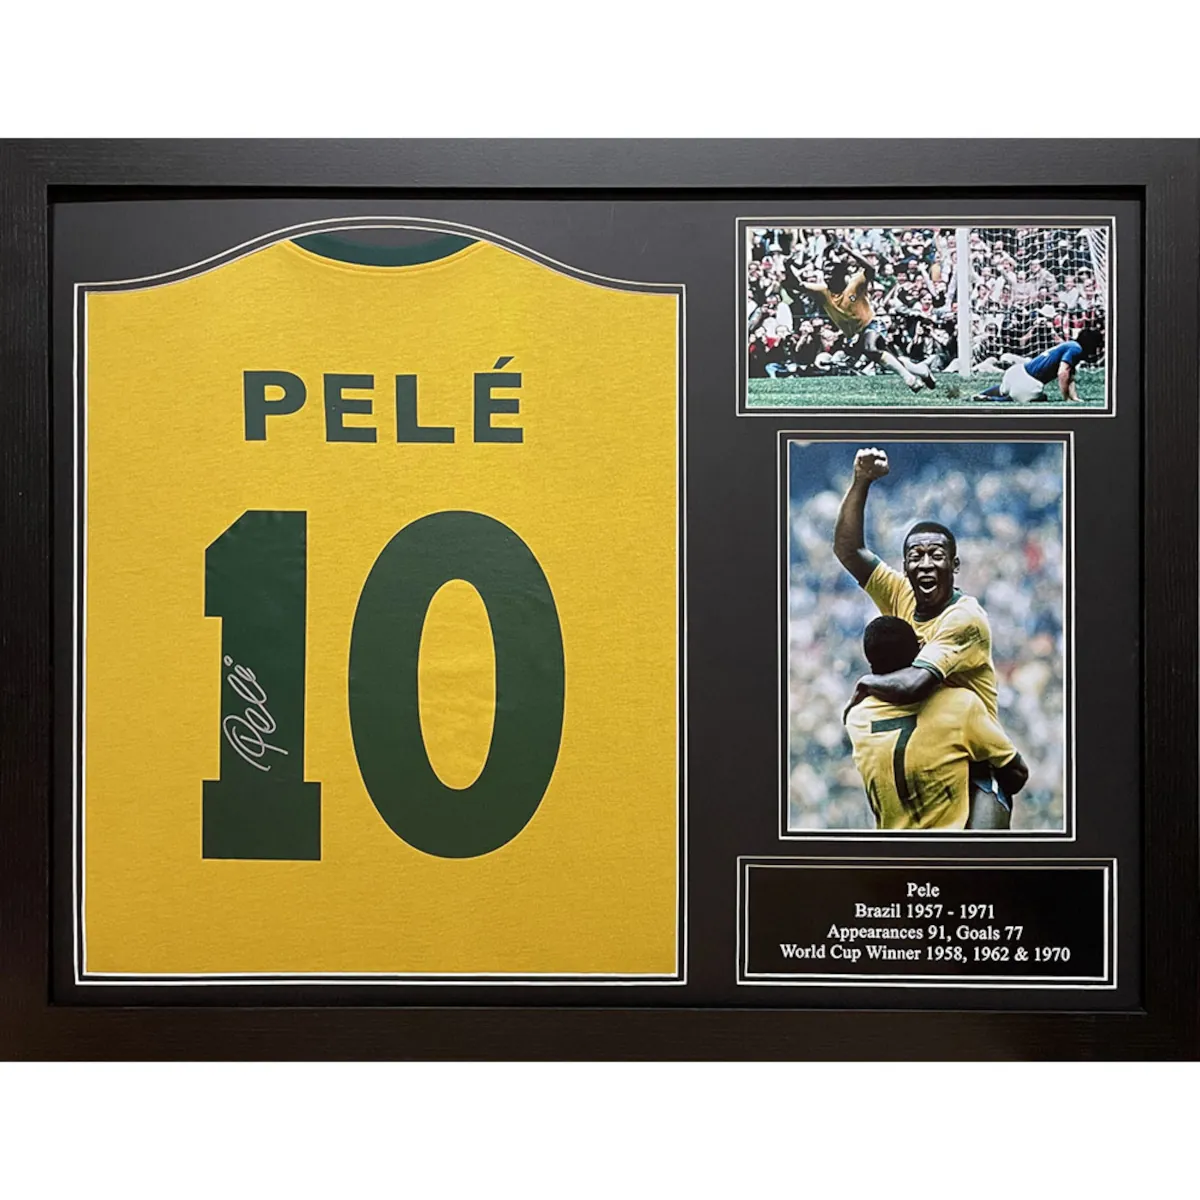 TM-03193 Brazil World Cup Winner 1970 Pele Framed Signed Replica Football Shirt